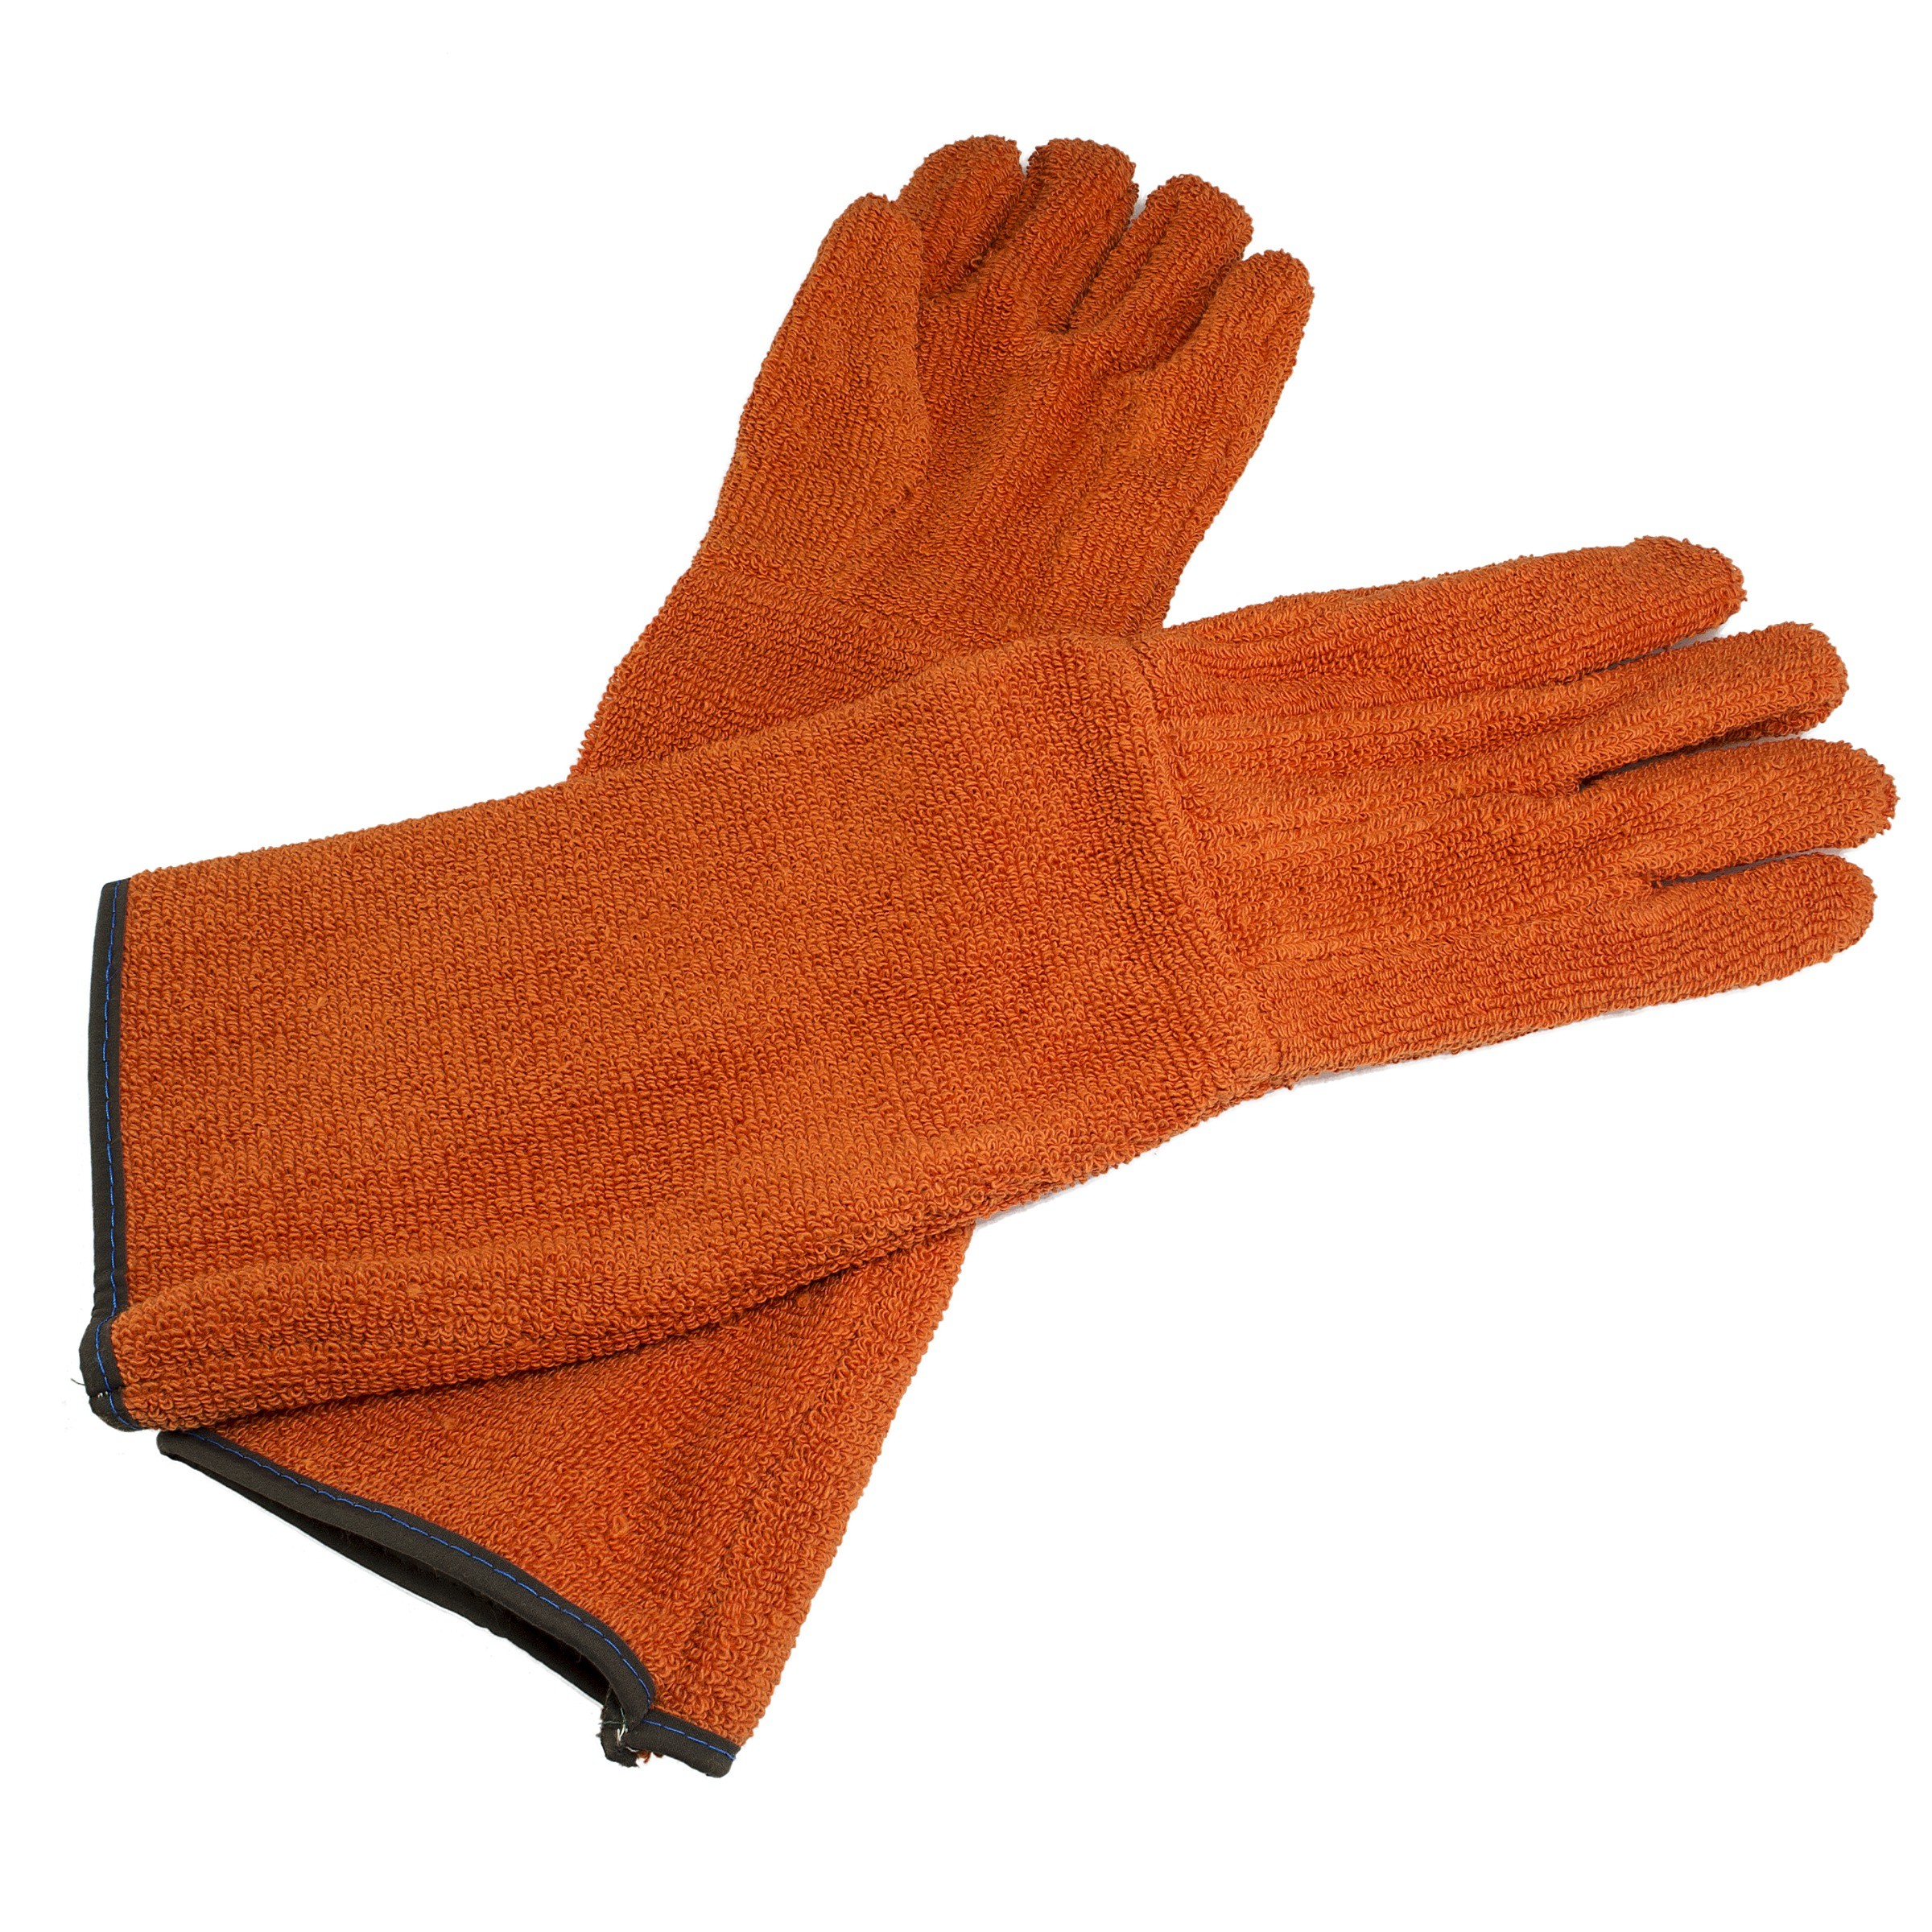 Bel-Art® Orange Clavies Heat Resistant Biohazard Autoclave/O